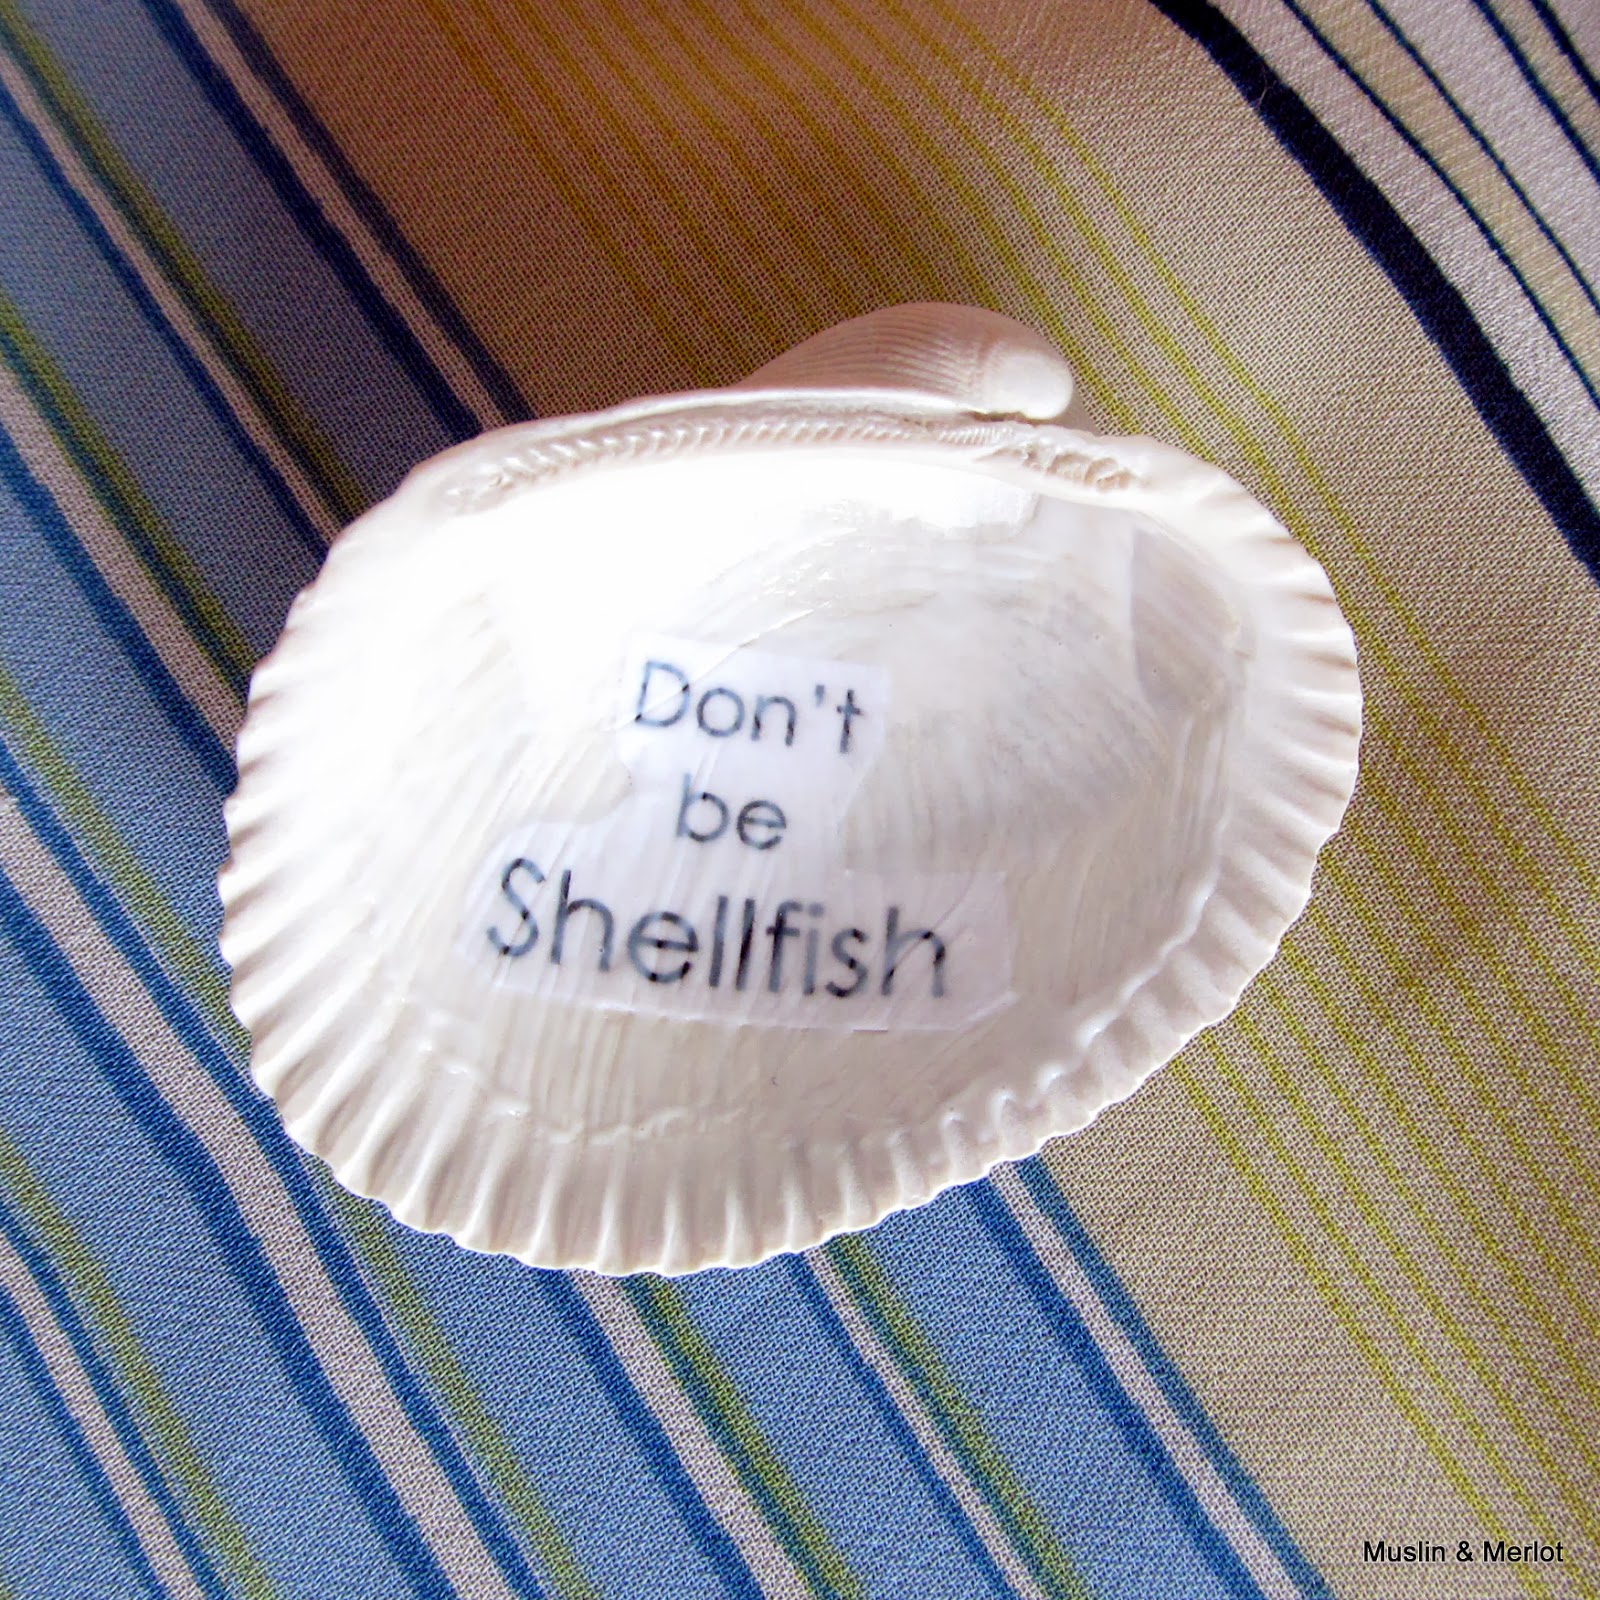 Seashell craft by Muslin & Merlot. Don't be Shellfish!